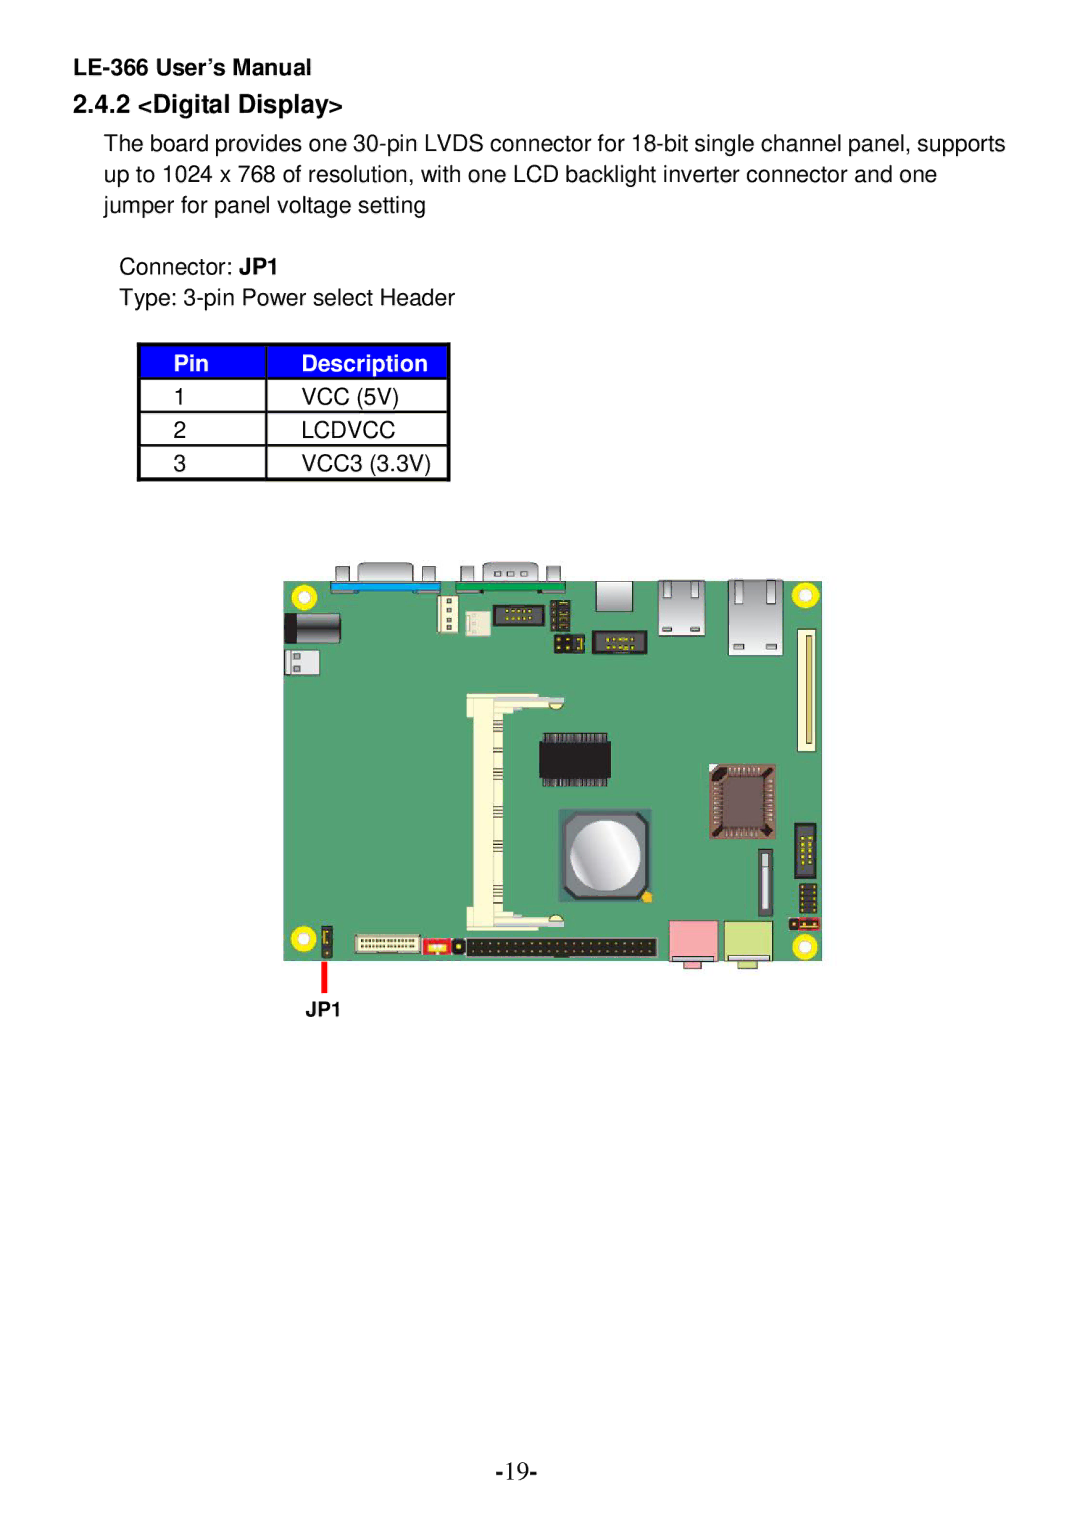 AMD LE-366 user manual Digital Display, Pin Description 